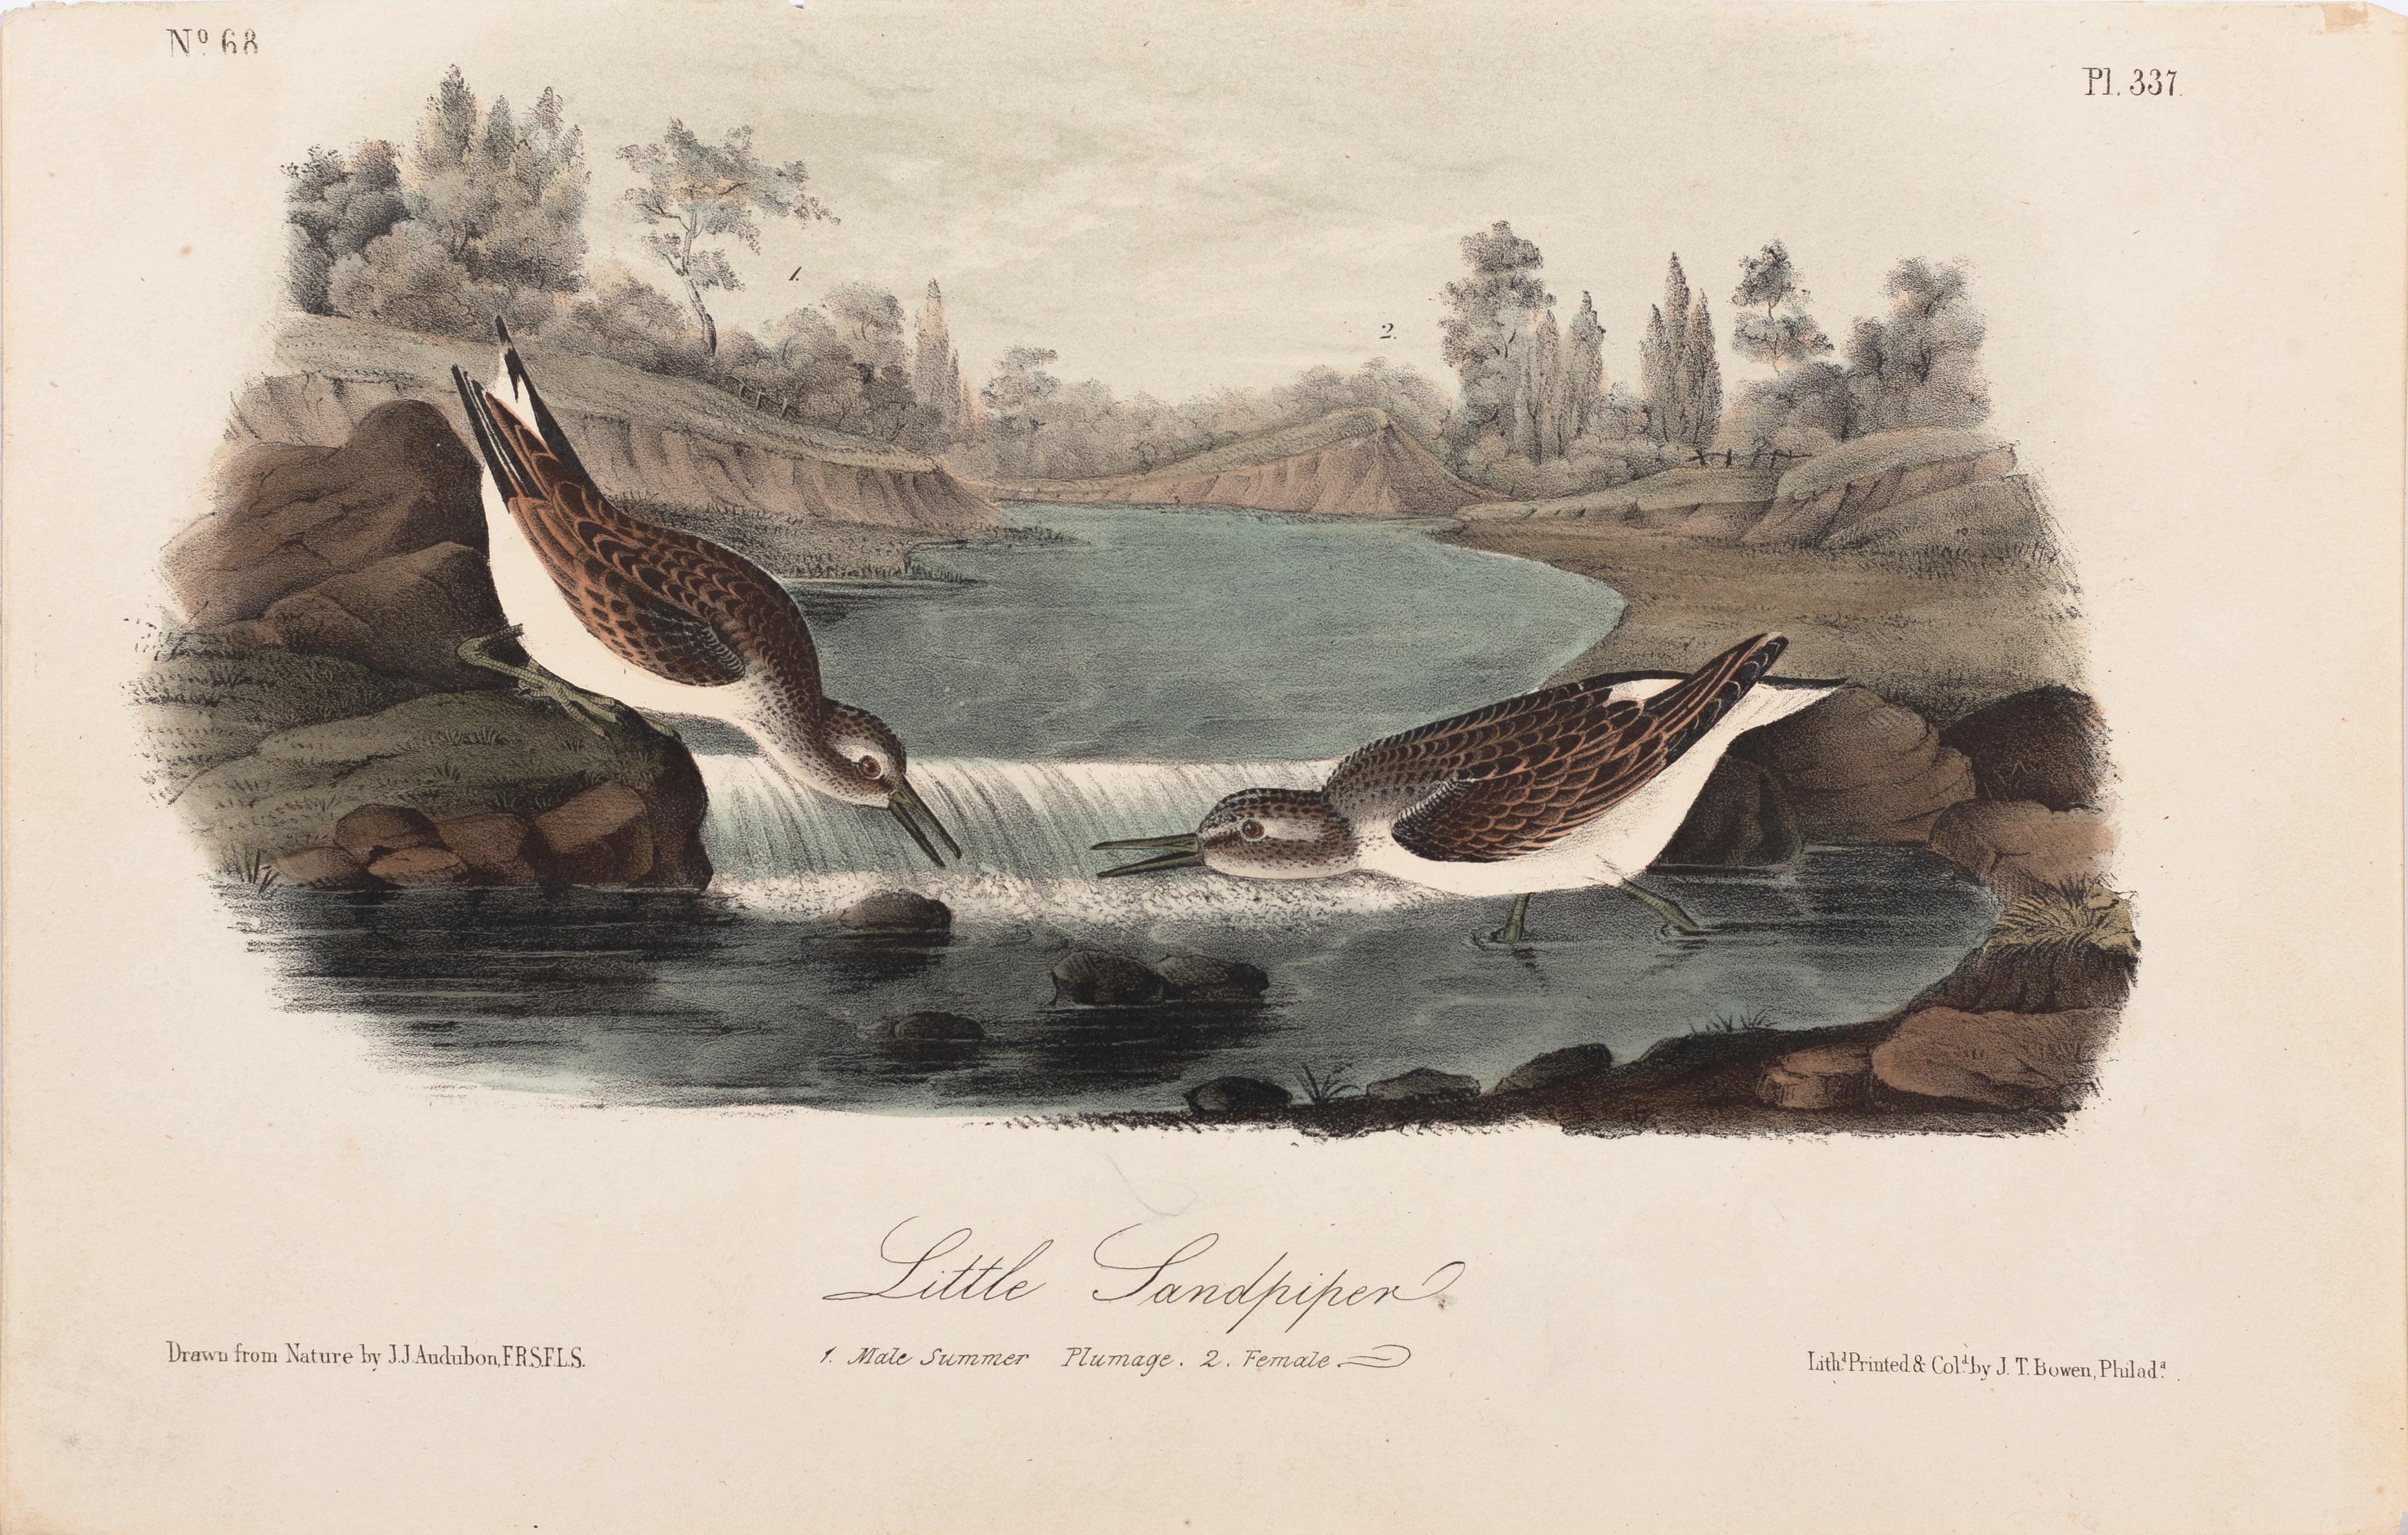 The Birds of America "Little Sandpiper" Plate 337